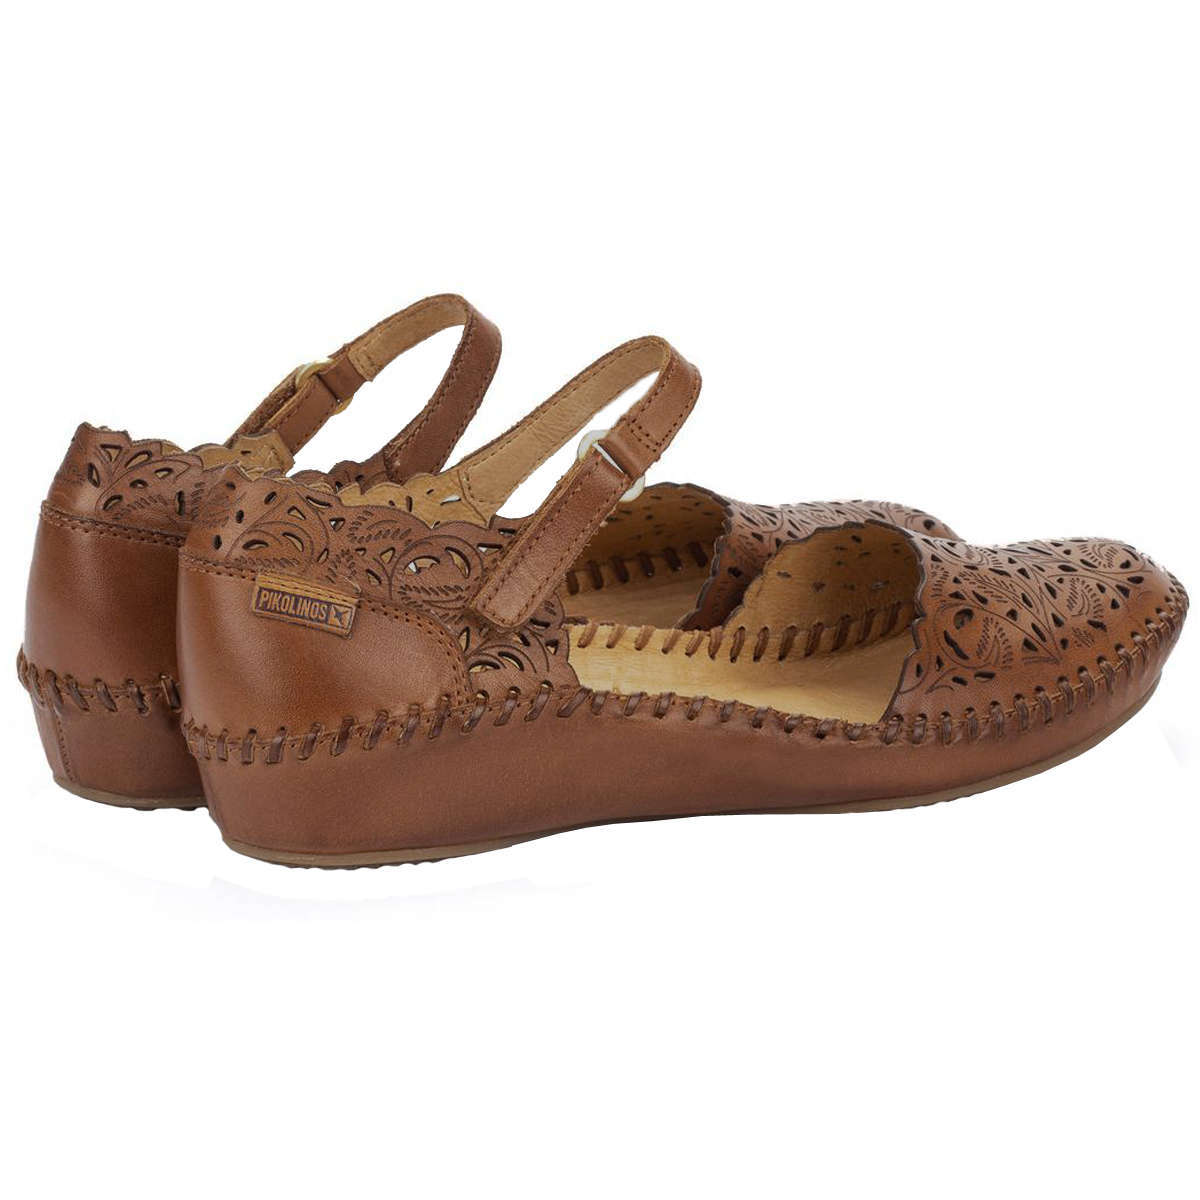 Pikolinos Puerto Vallarta 655-0906 Leather Womens Sandals#color_brandy